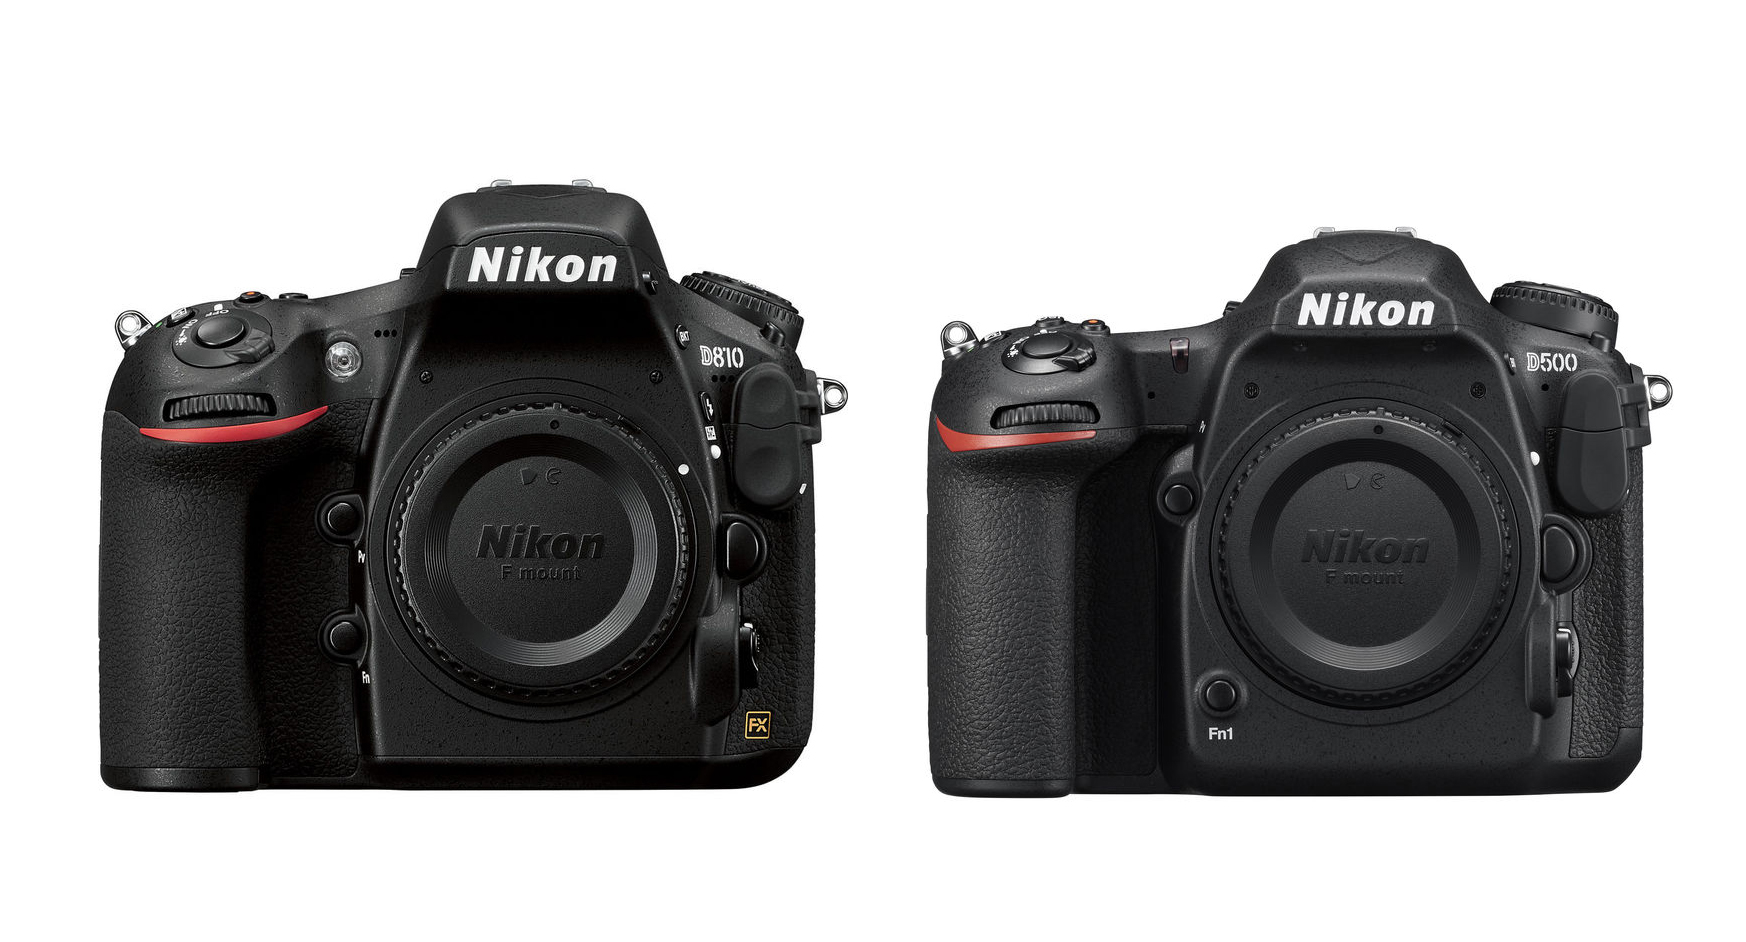 Gray Market Nikon D810 for $1,999, D500 for $1,449 !